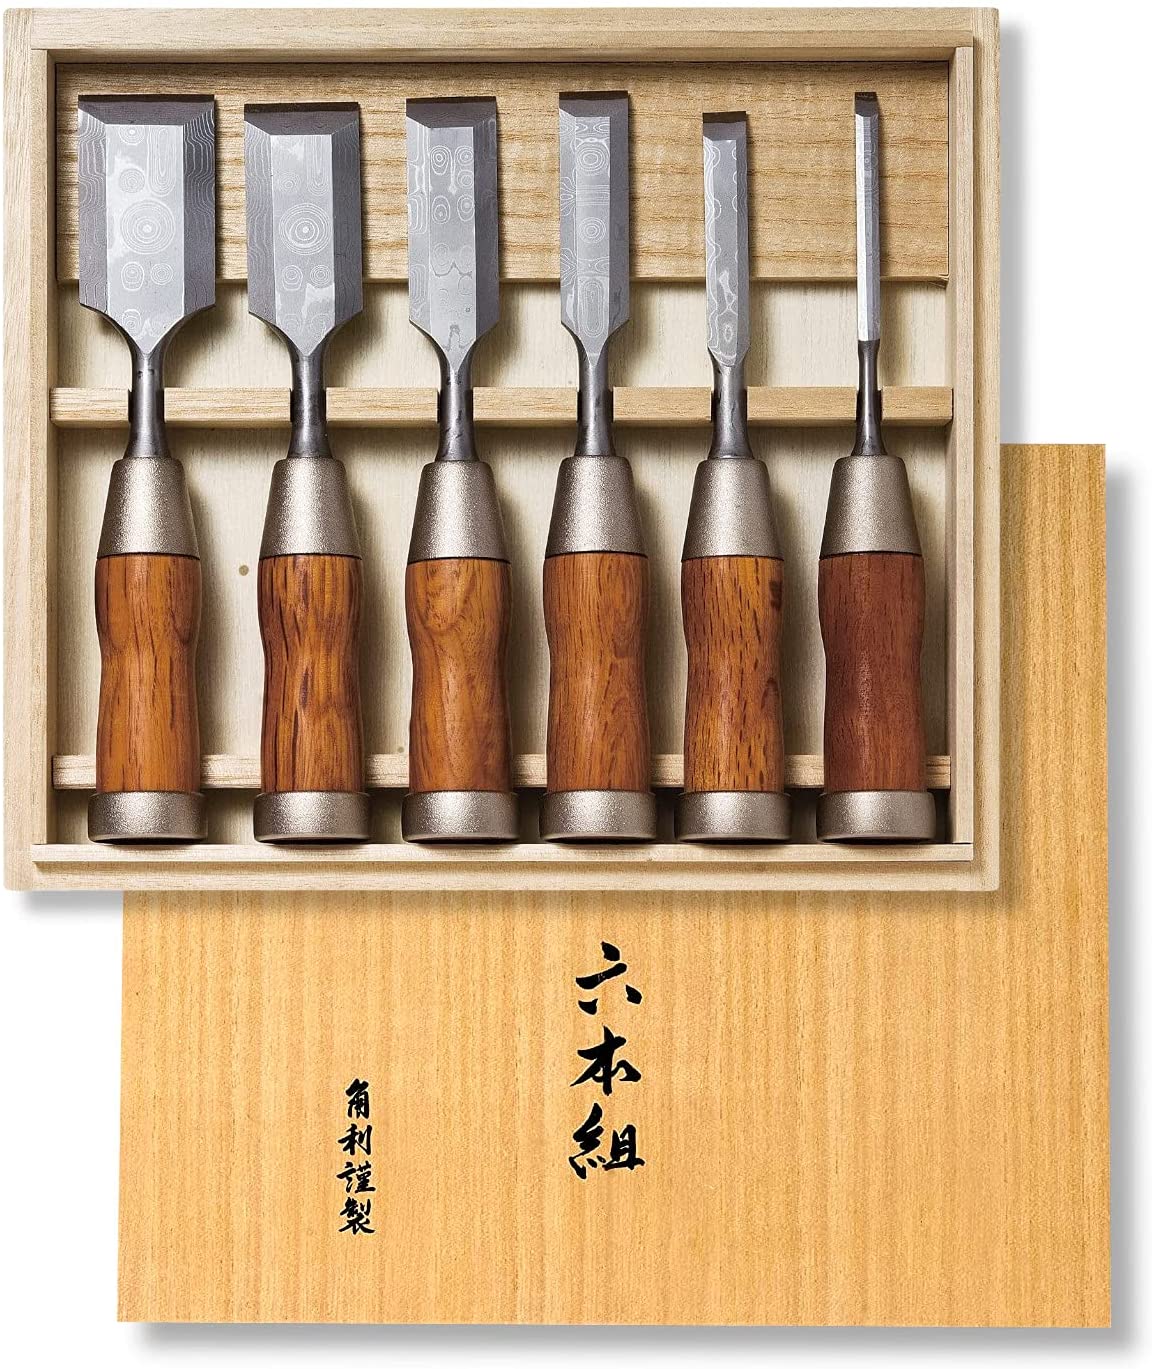 Hand-forged 12mm Kiridashi carving marking chisel made in Japan